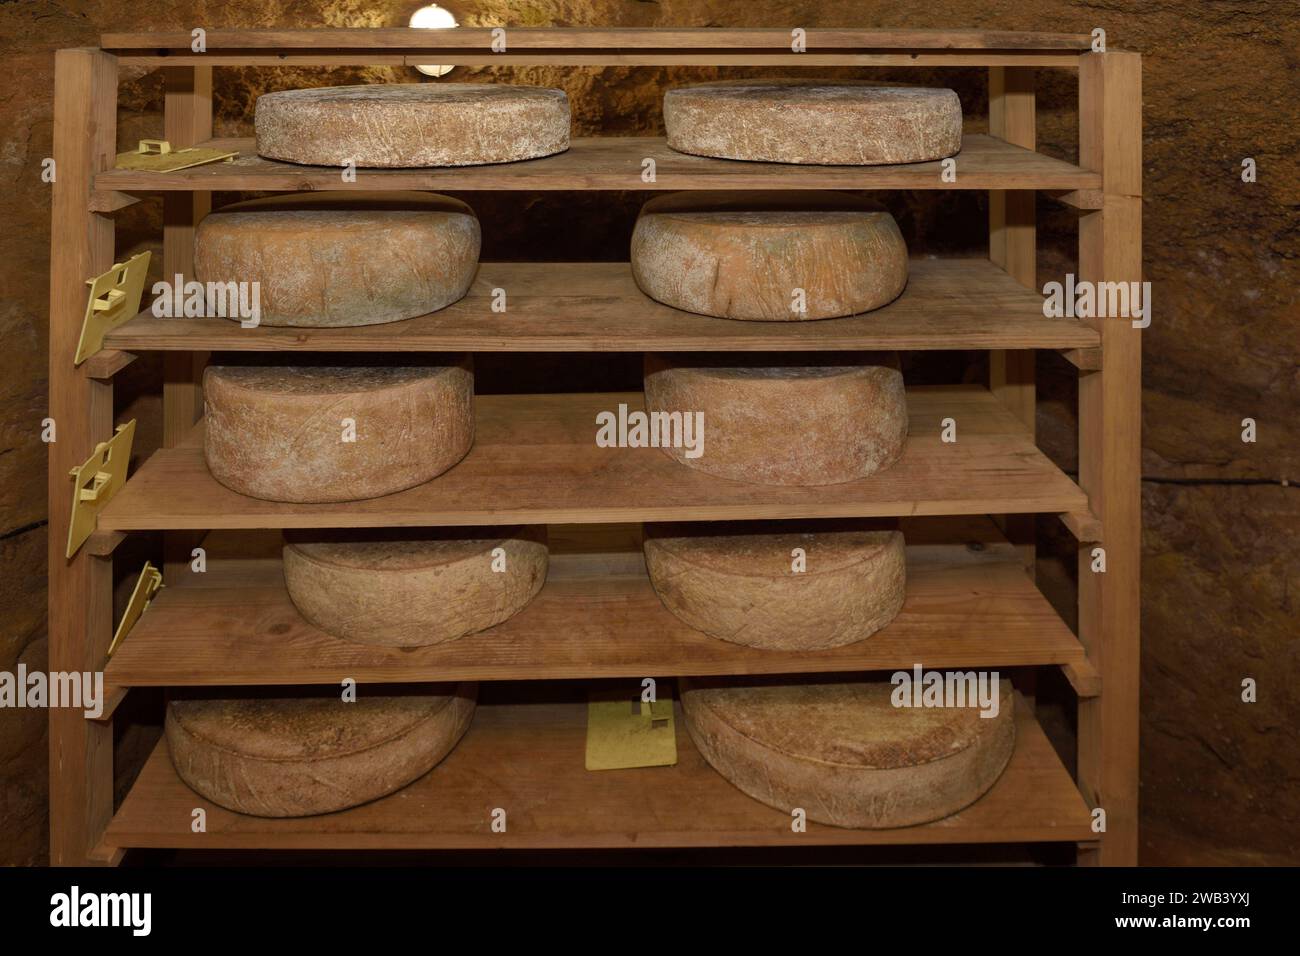 cheese from a small producer,Pla de Estany, Girona province, Catalonia, Spain Stock Photo